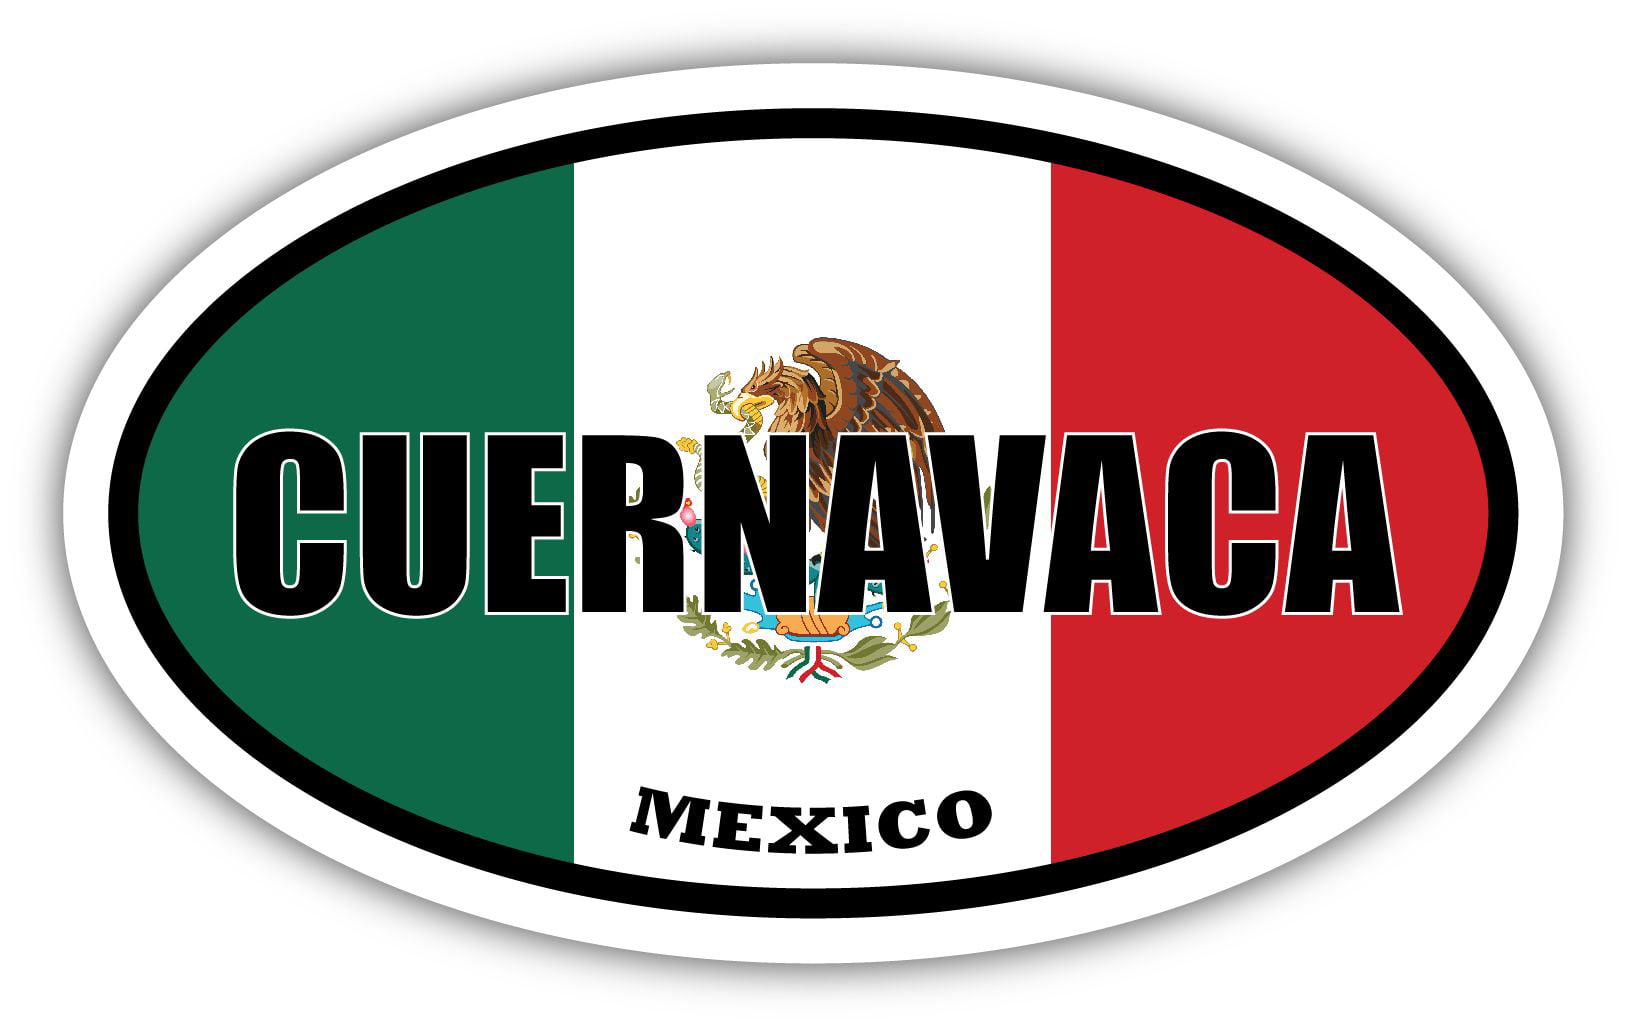 Cuernavaca Mexico Flag Oval Decal Vinyl Bumper Sticker 3x5 inches -  